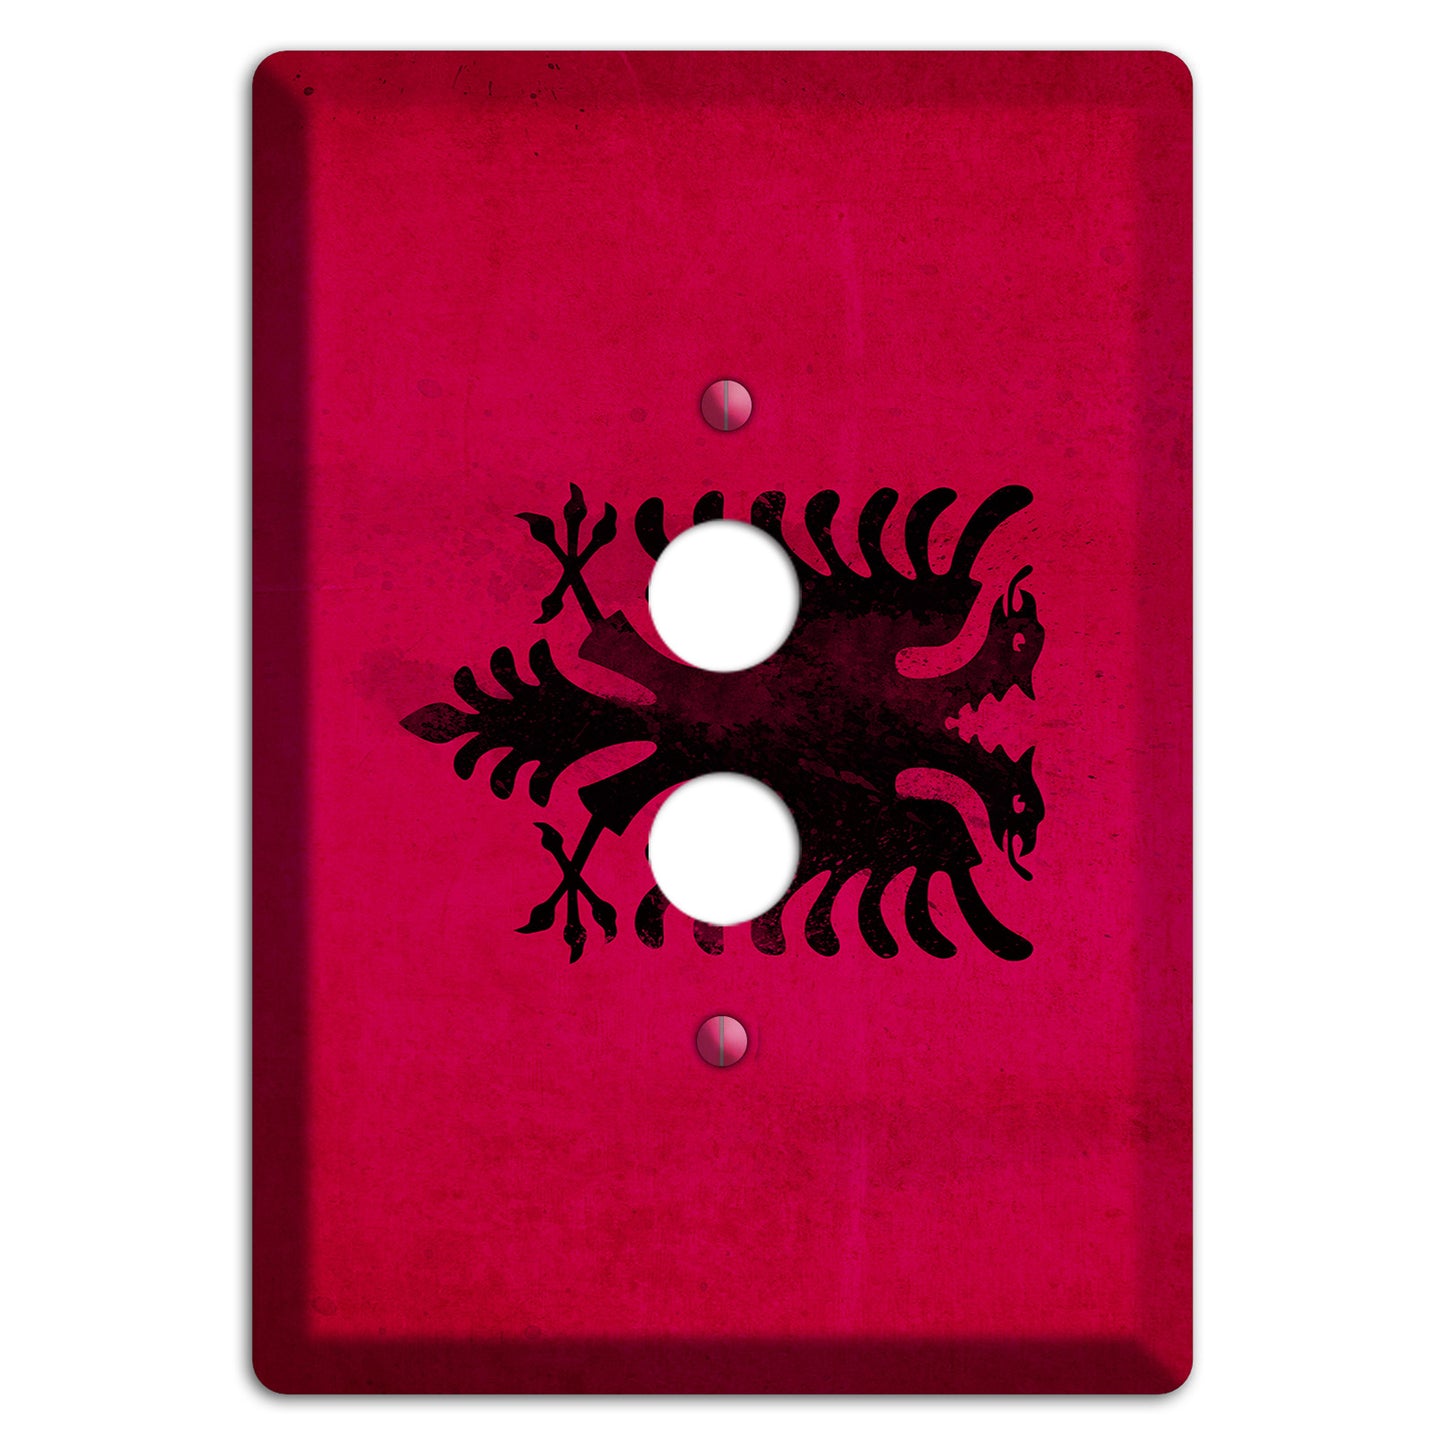 Albania Cover Plates 1 Pushbutton Wallplate